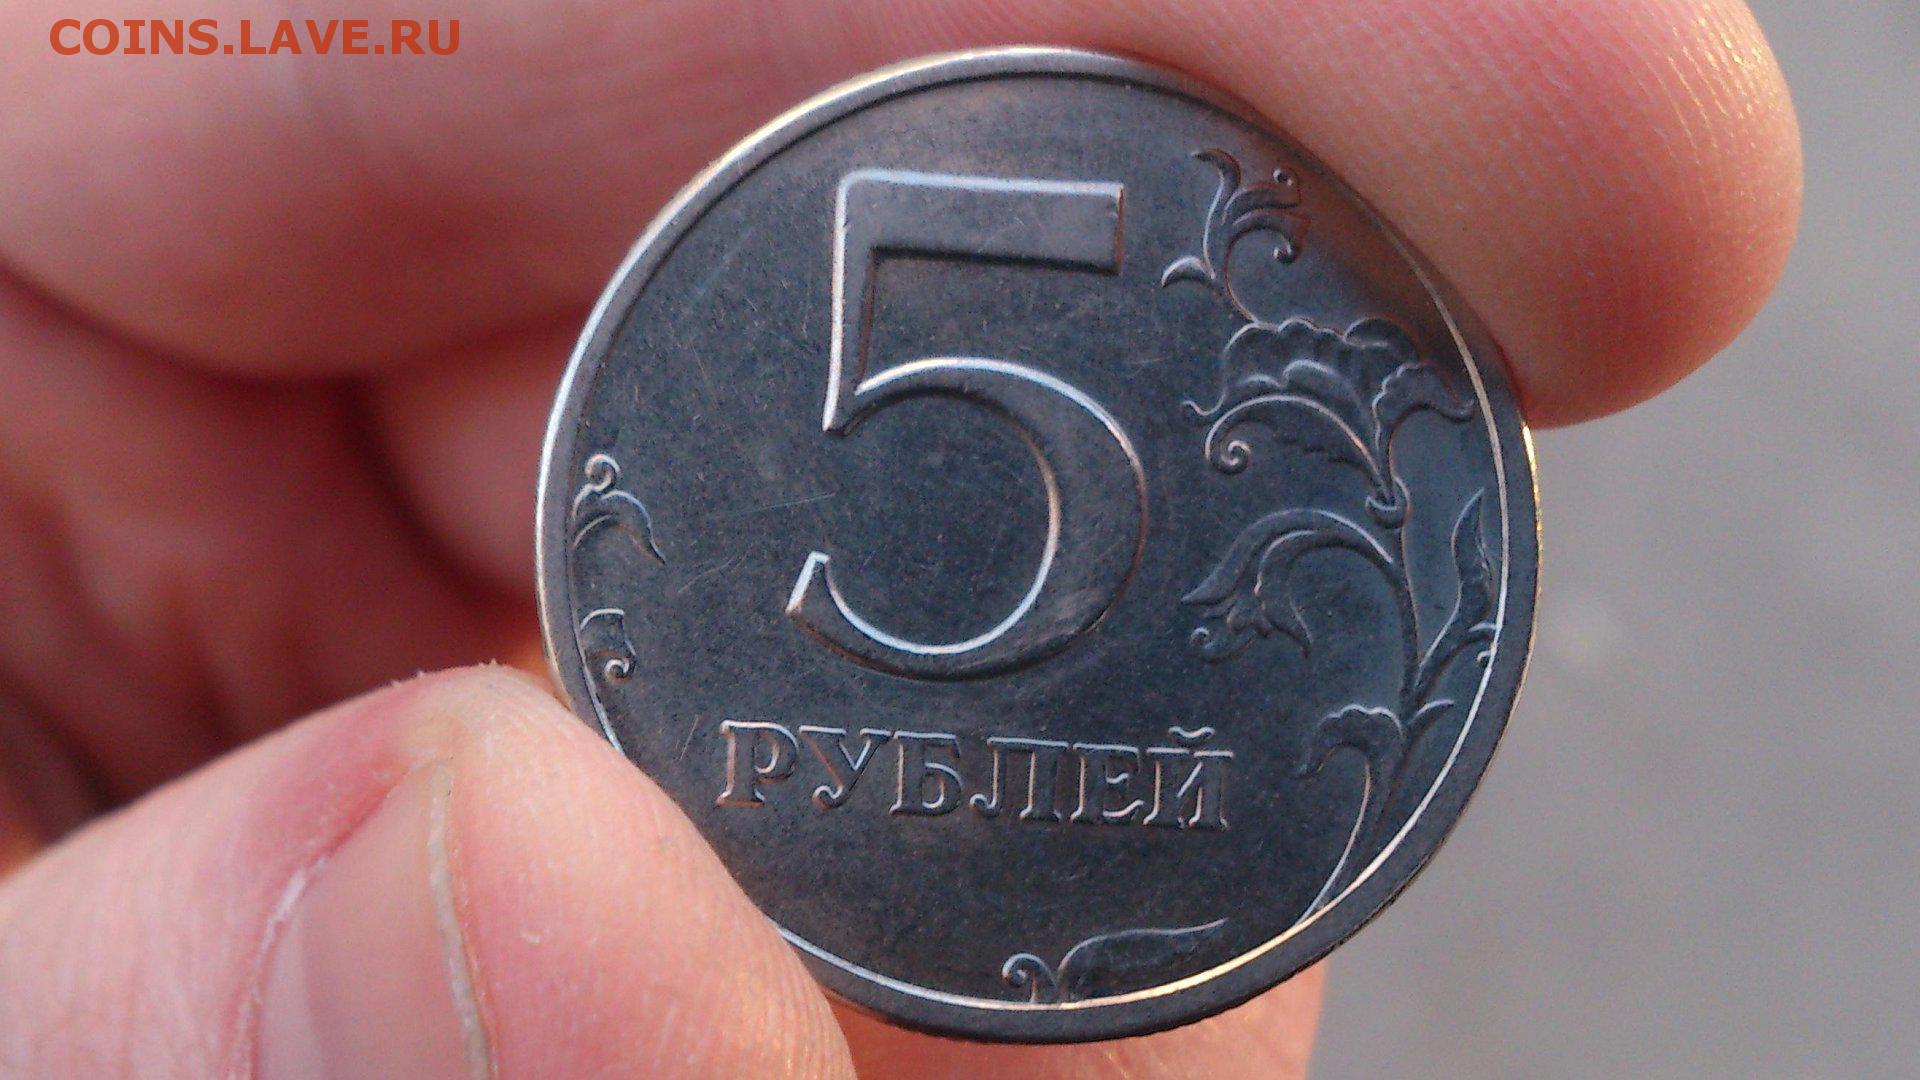 Занять 5 рублей. Монеты. Монеты рубли. Монета 5 рублей в руке. Монетка 5 рублей.